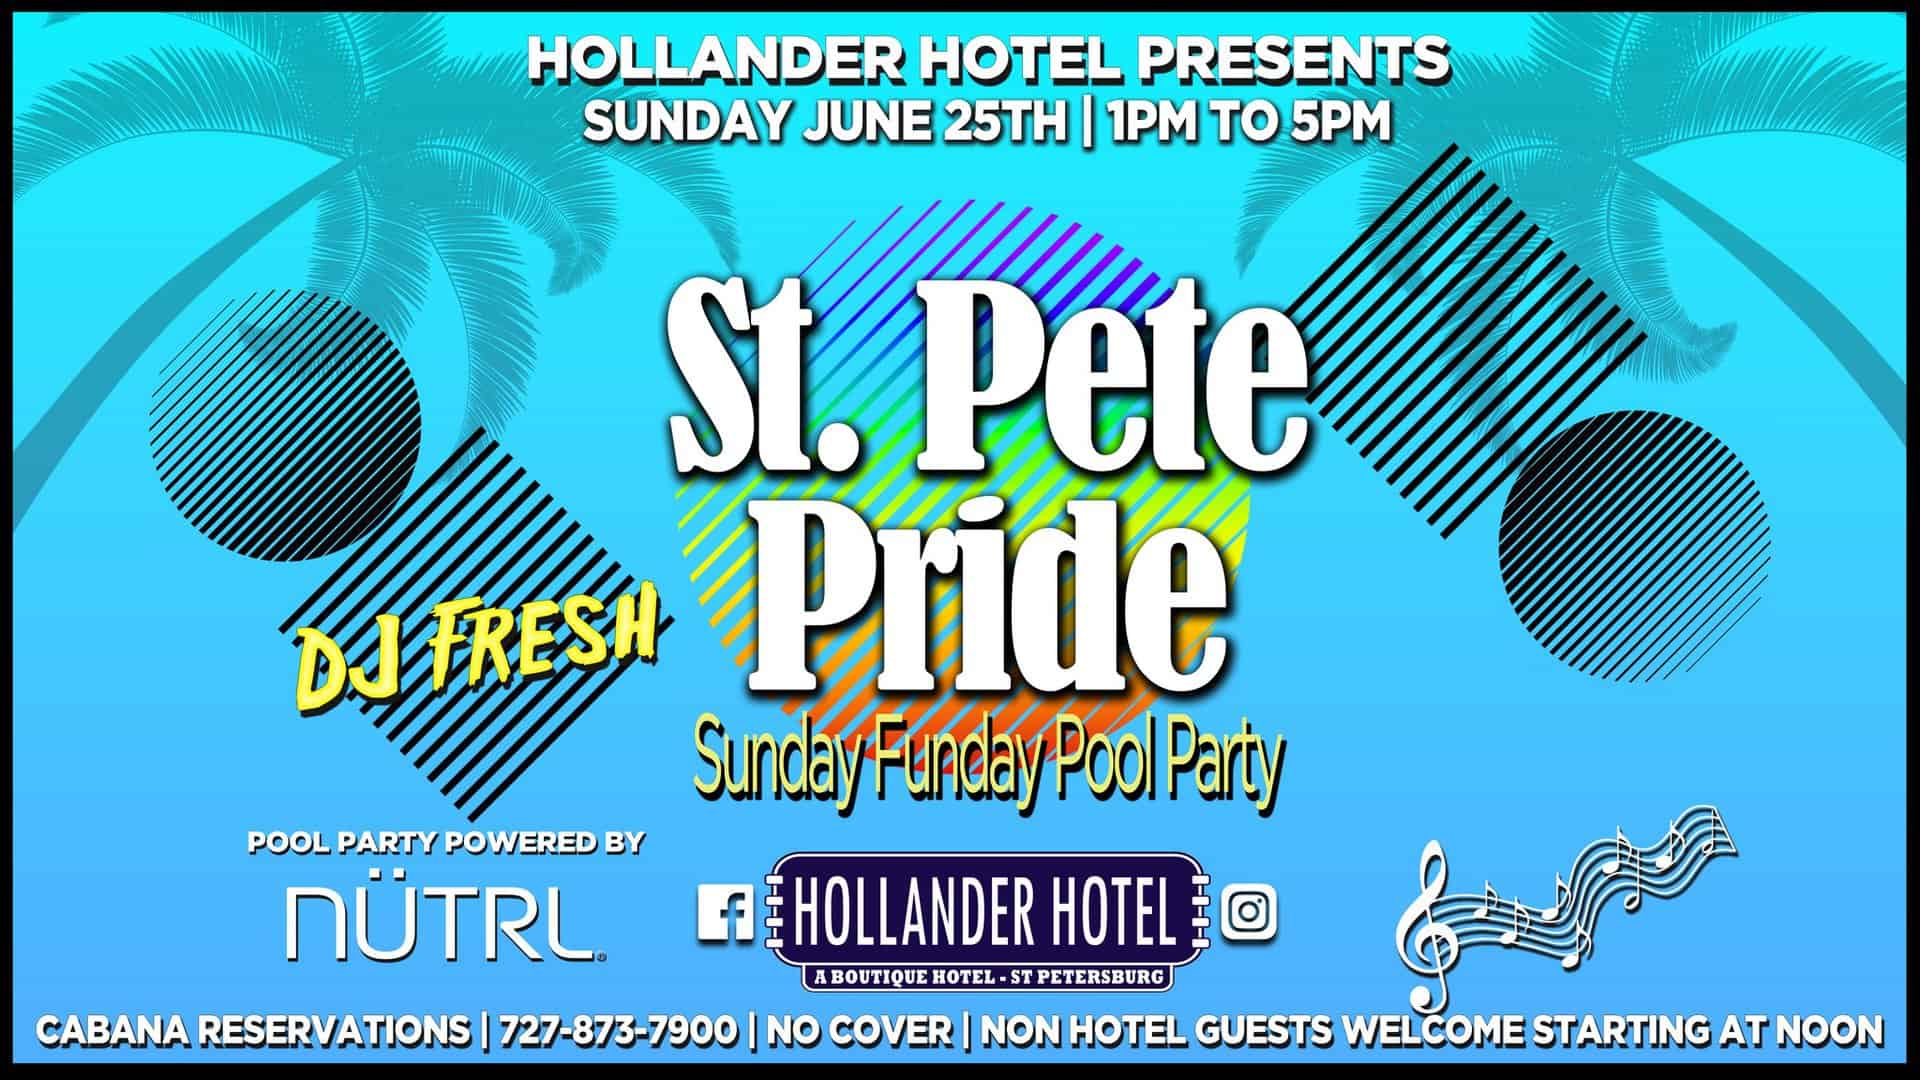 Hollander Hotel Pride pool party with DJ Fresh